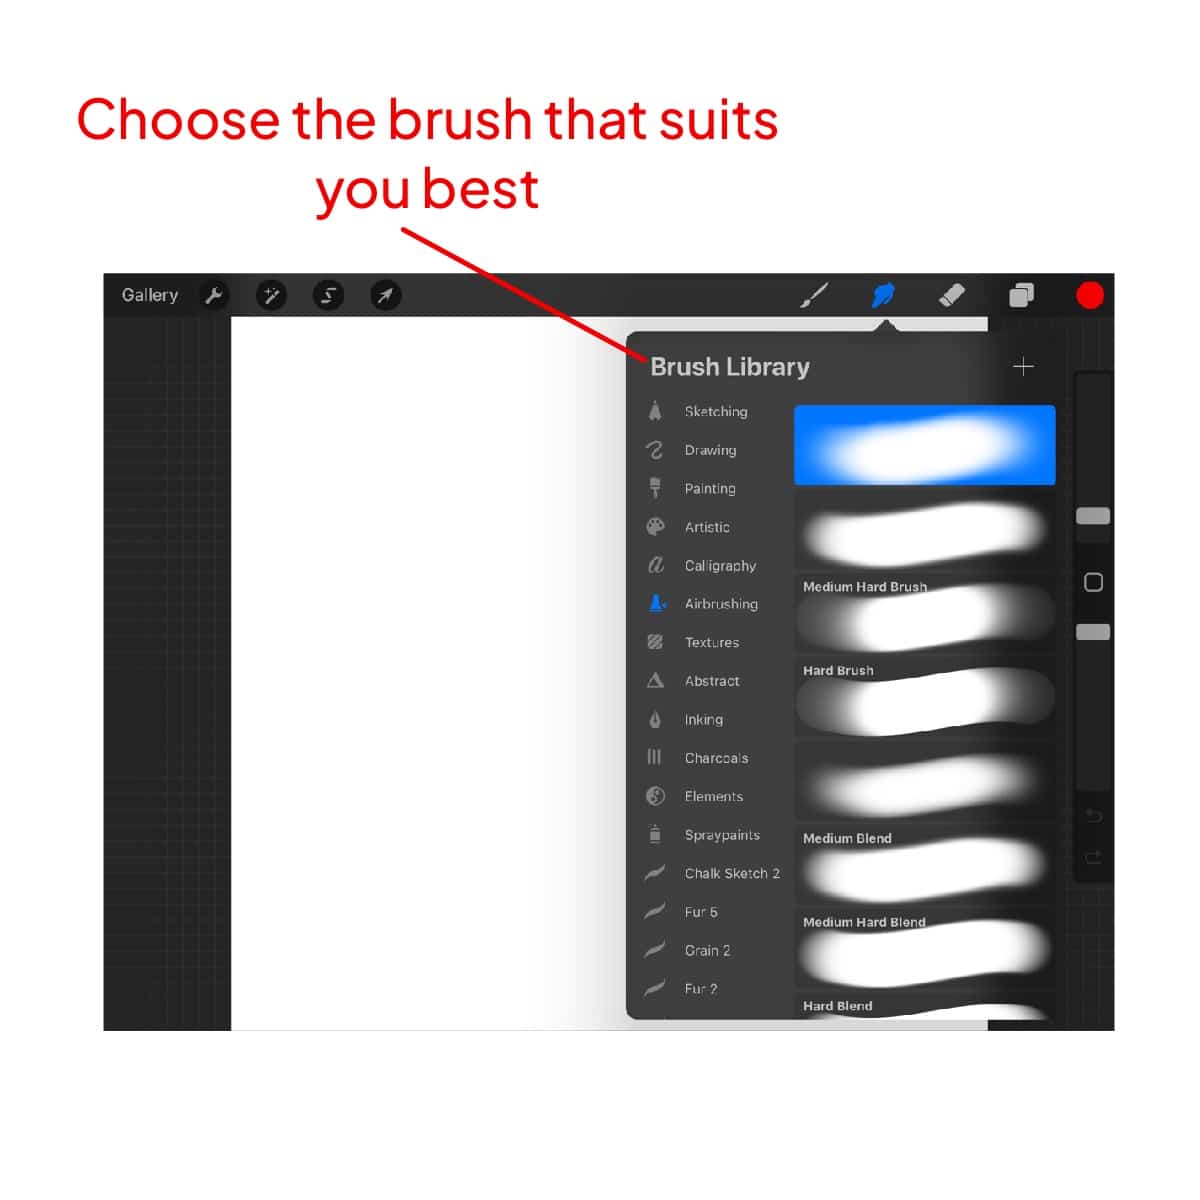 Choosing the right brush